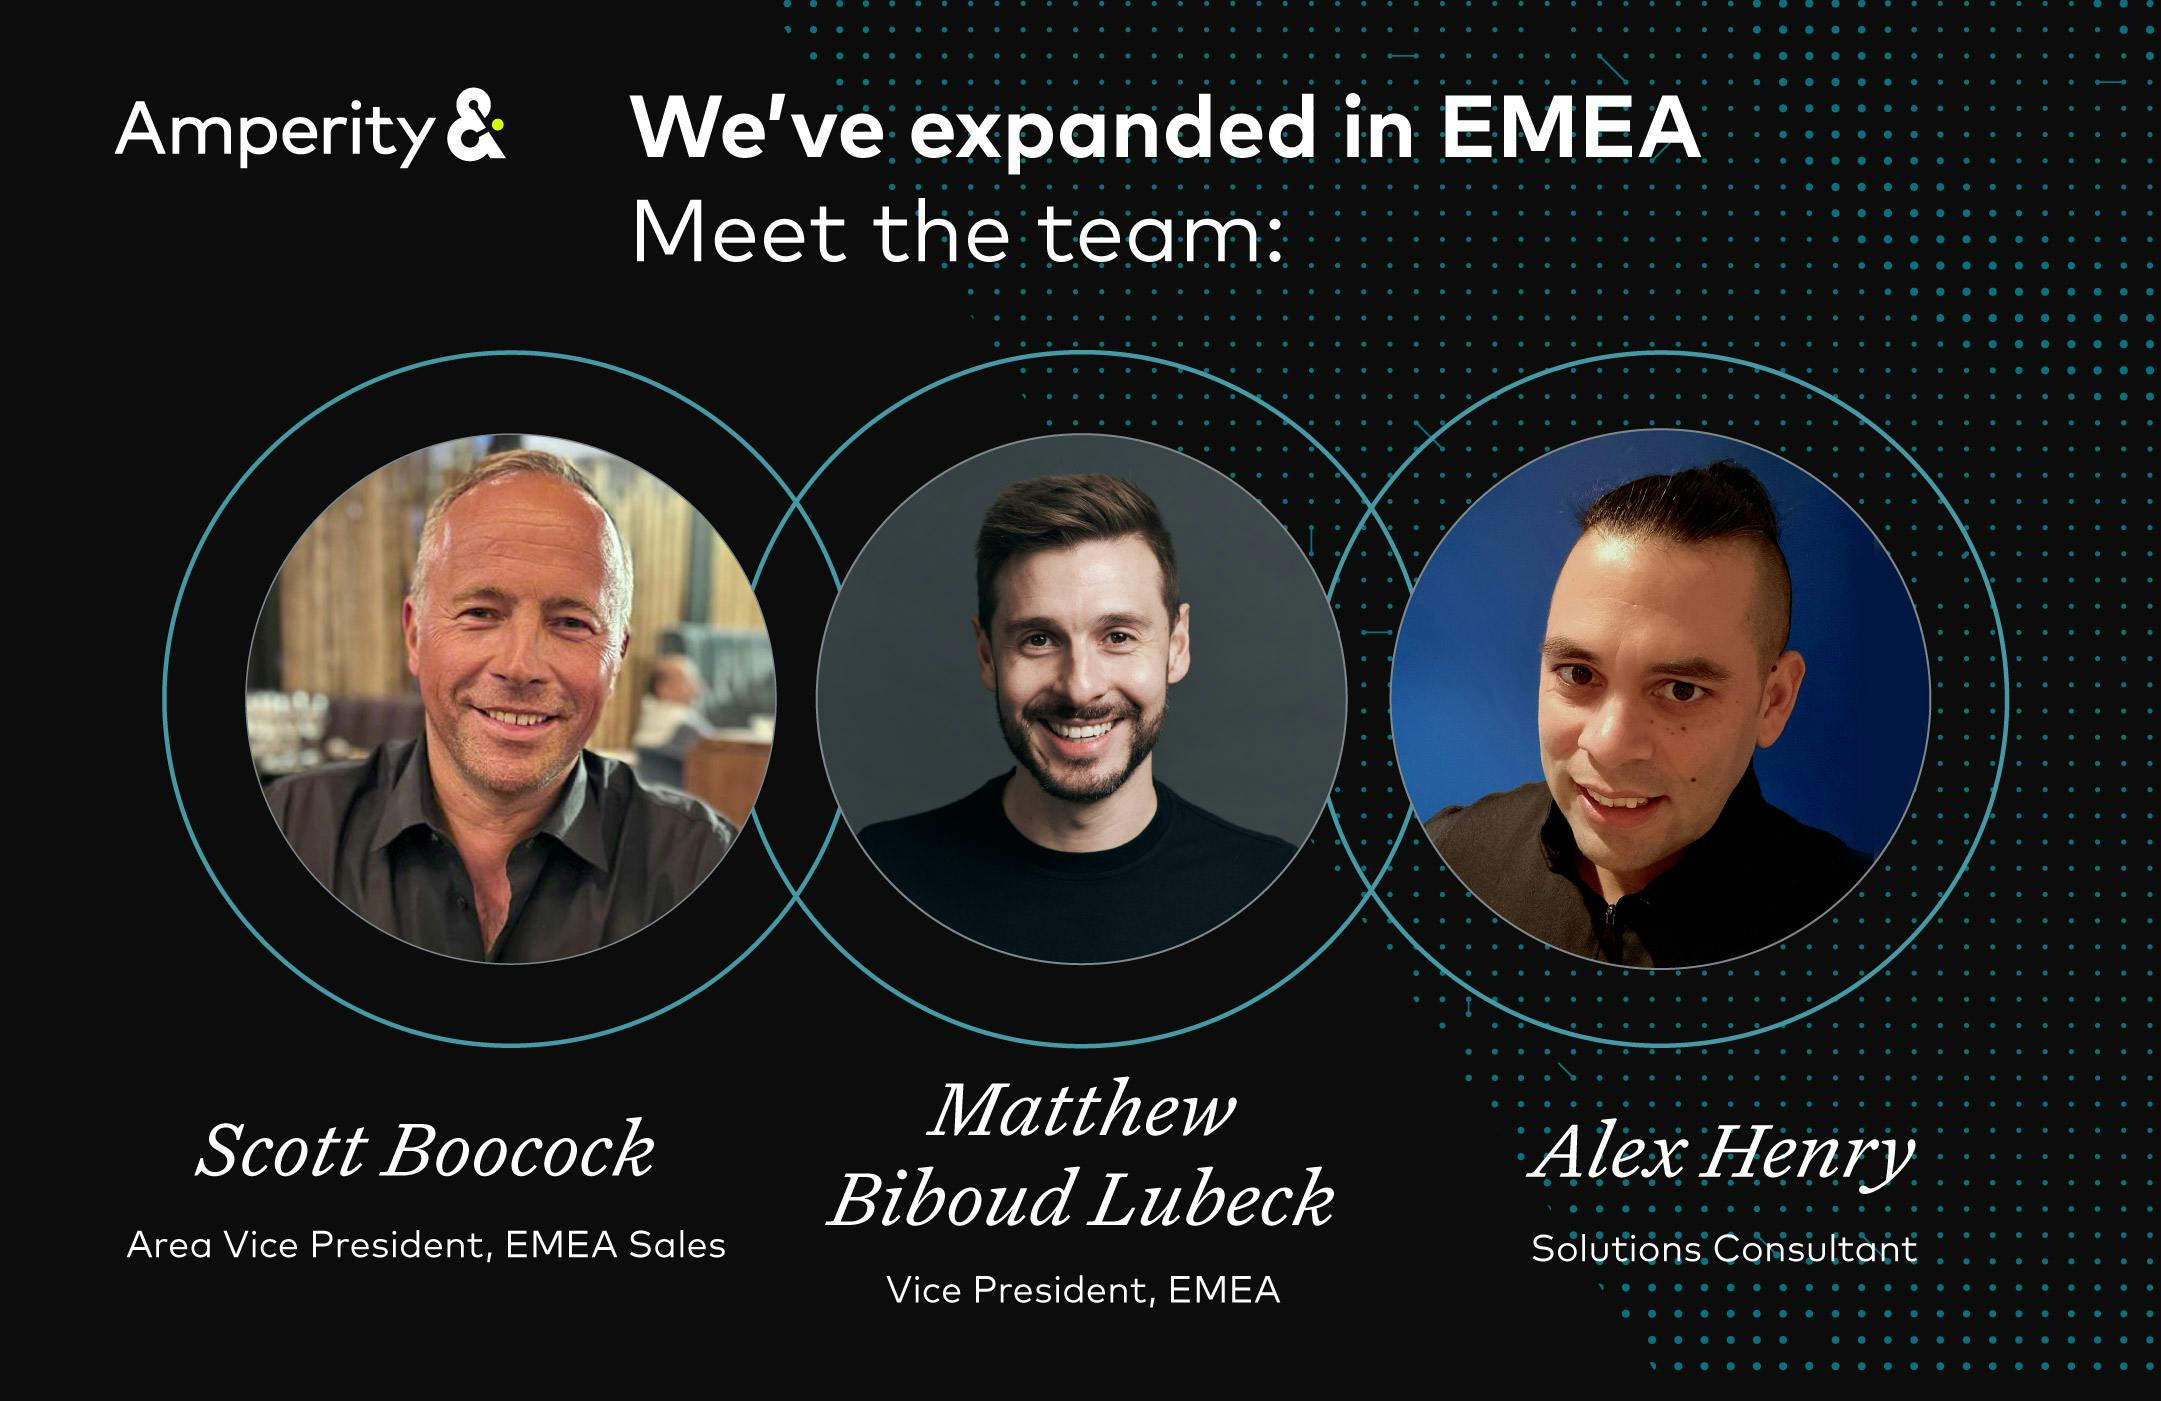 We've expanded in EMEA. Meet the team: Scott Boocock, Matthew Biboud-Lubeck, and Alex Henry.